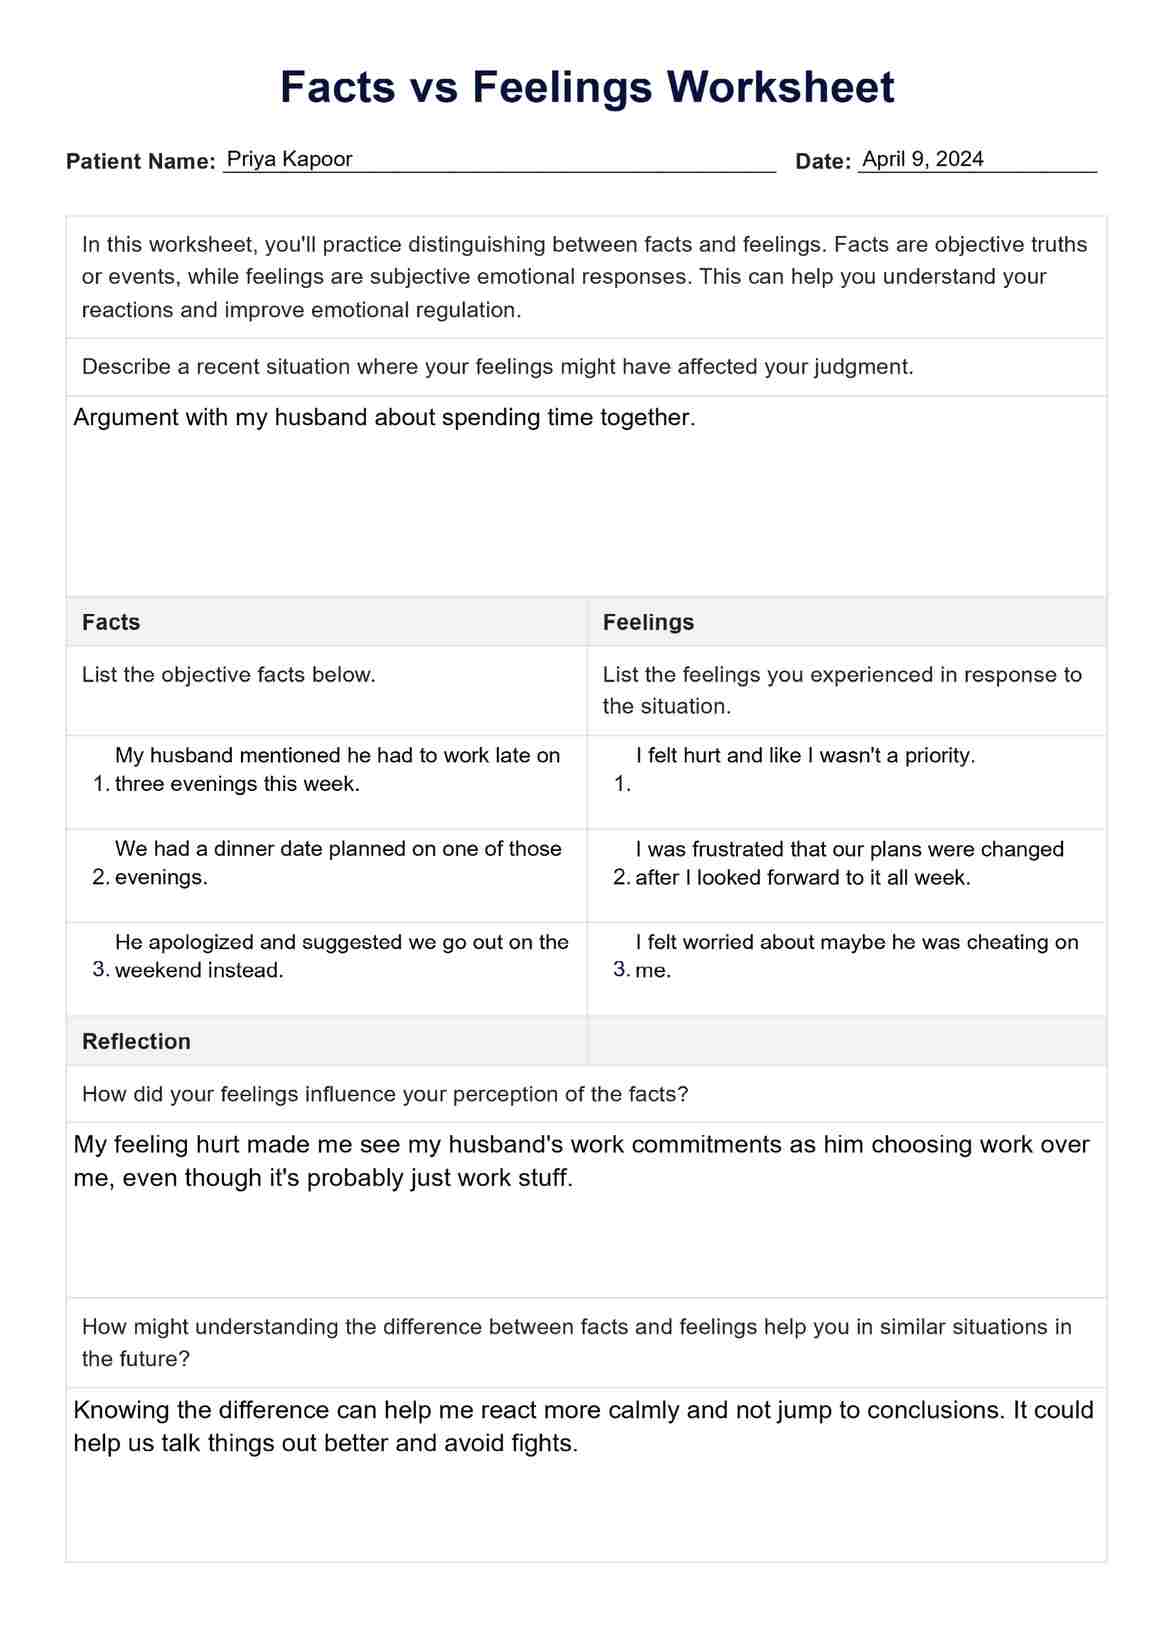 Facts vs Feelings Worksheet PDF Example